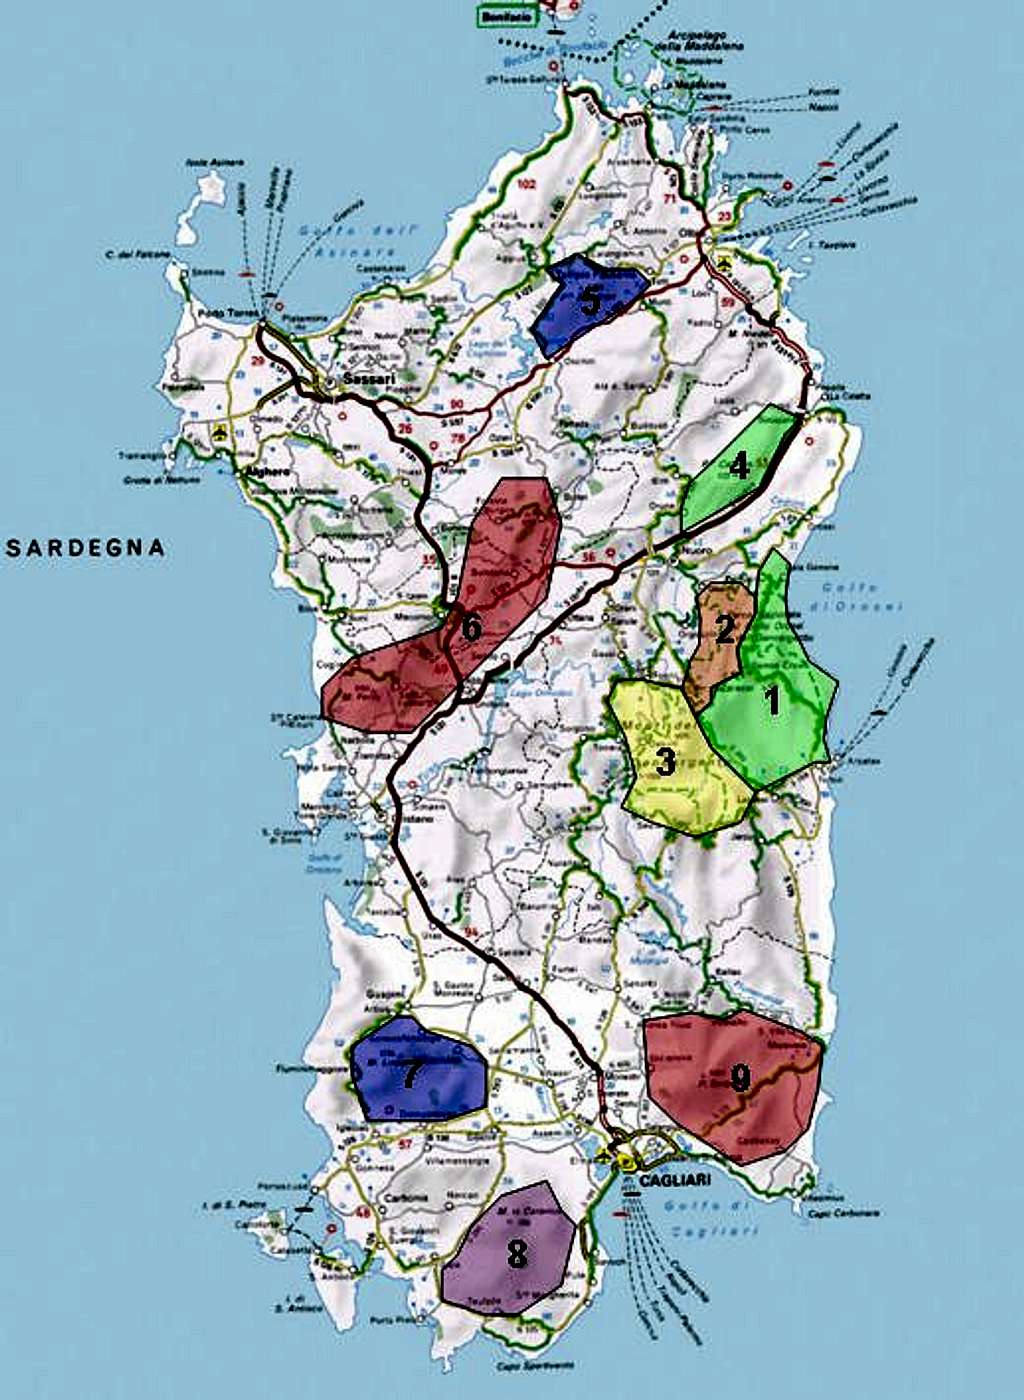 Overview Map of Sardegna / Sardinia